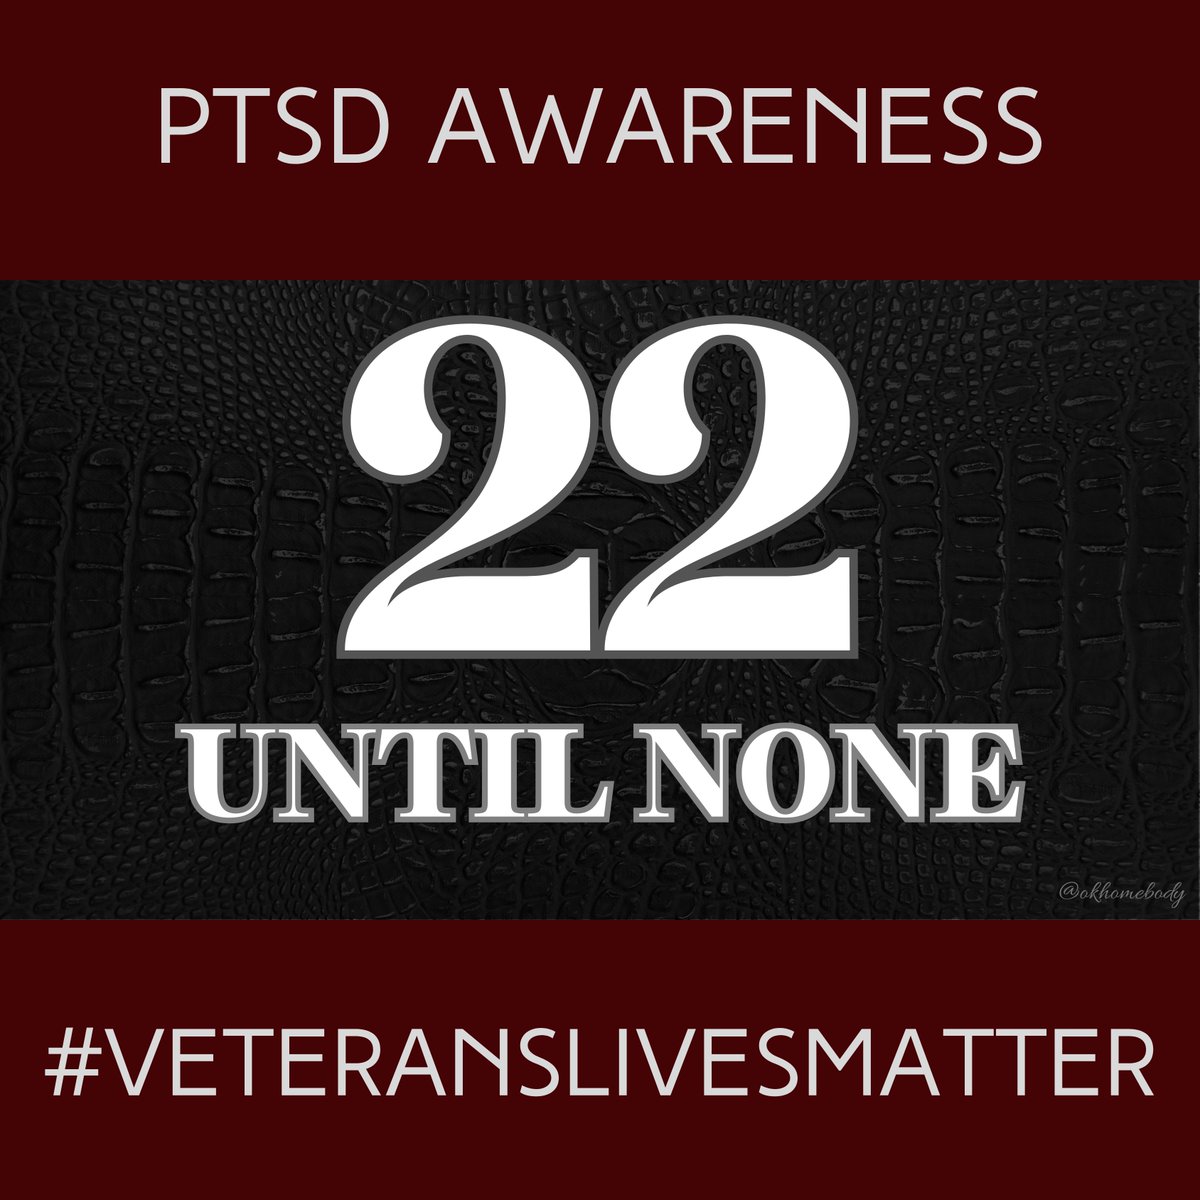 🇺🇸 #ThoughtfulTuesday #Buddy✅with #Veterans 🙏RH ❤️#BuddyChecksMatter because #VeteransLivesMatter❤️ ⭐️ 🇺🇸 Repost #EndVeteranSuicide #988press1 🇺🇸⭐️ 🇺🇸@Mike04091780 @roll_tide74 @Ohiogabulldog ✈️ 🇺🇸@Sean93061307 @RandyBelcher57 @FrizzTm @P_FFlyers✈️ 🇺🇸@MikeGoodlander @JStancoff…